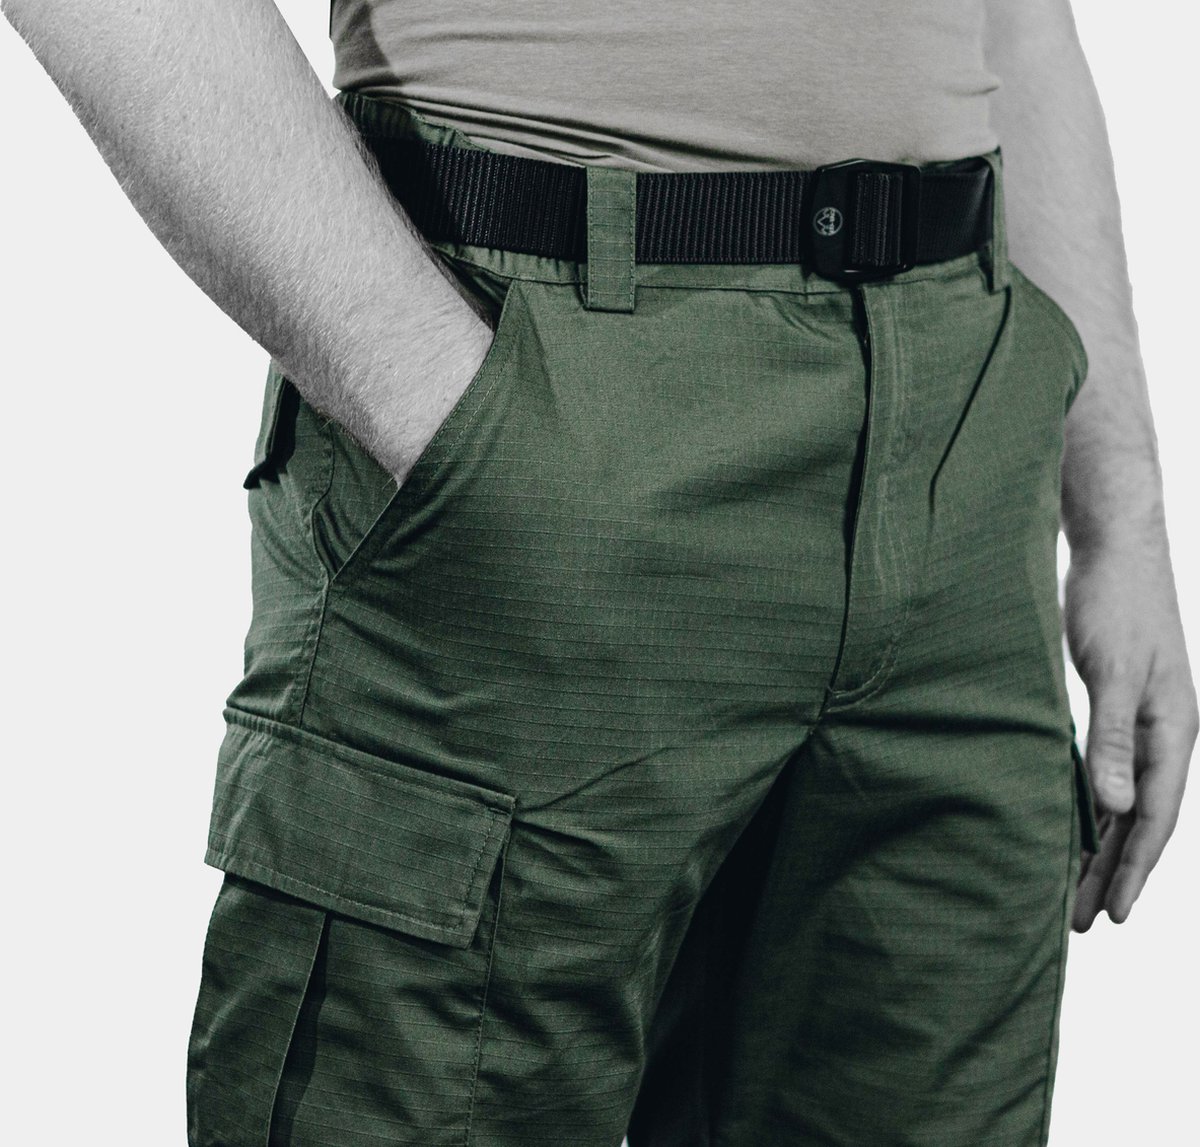 EU-TAC Combat Pants - Tactical Pants - Militaire Broek - Tactical Combat Pants - Airsoft - Airsoft Broek - Militaire kleding - Groen - Green - Maat S